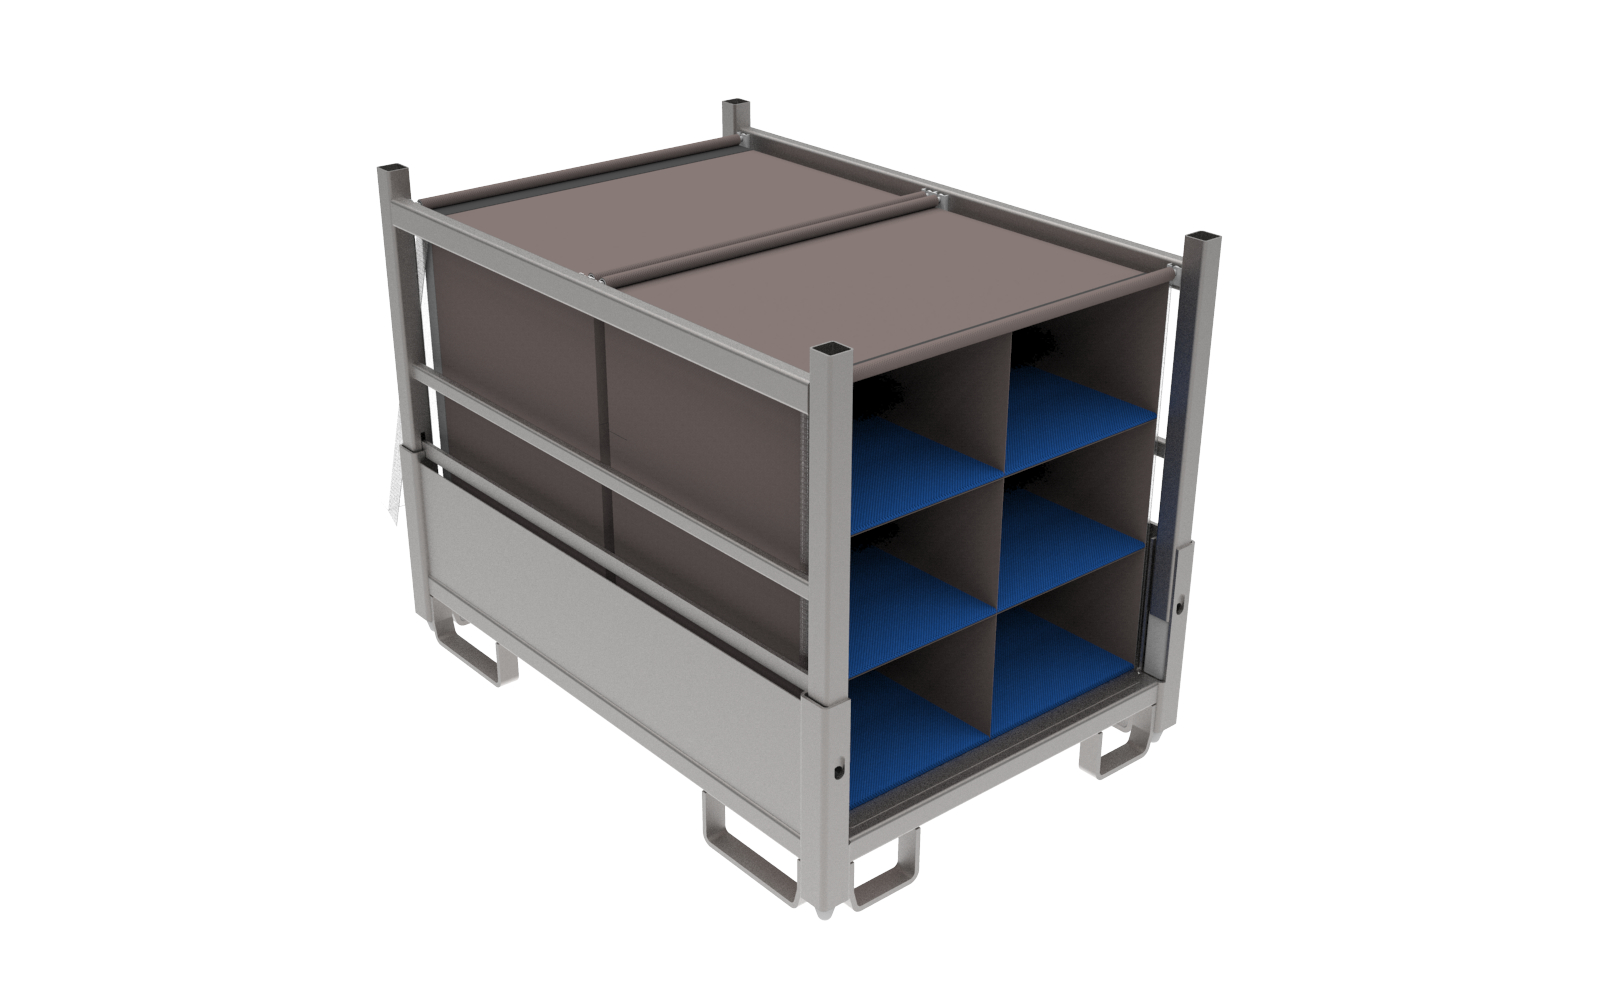 Textile applications for metal pallet boxes